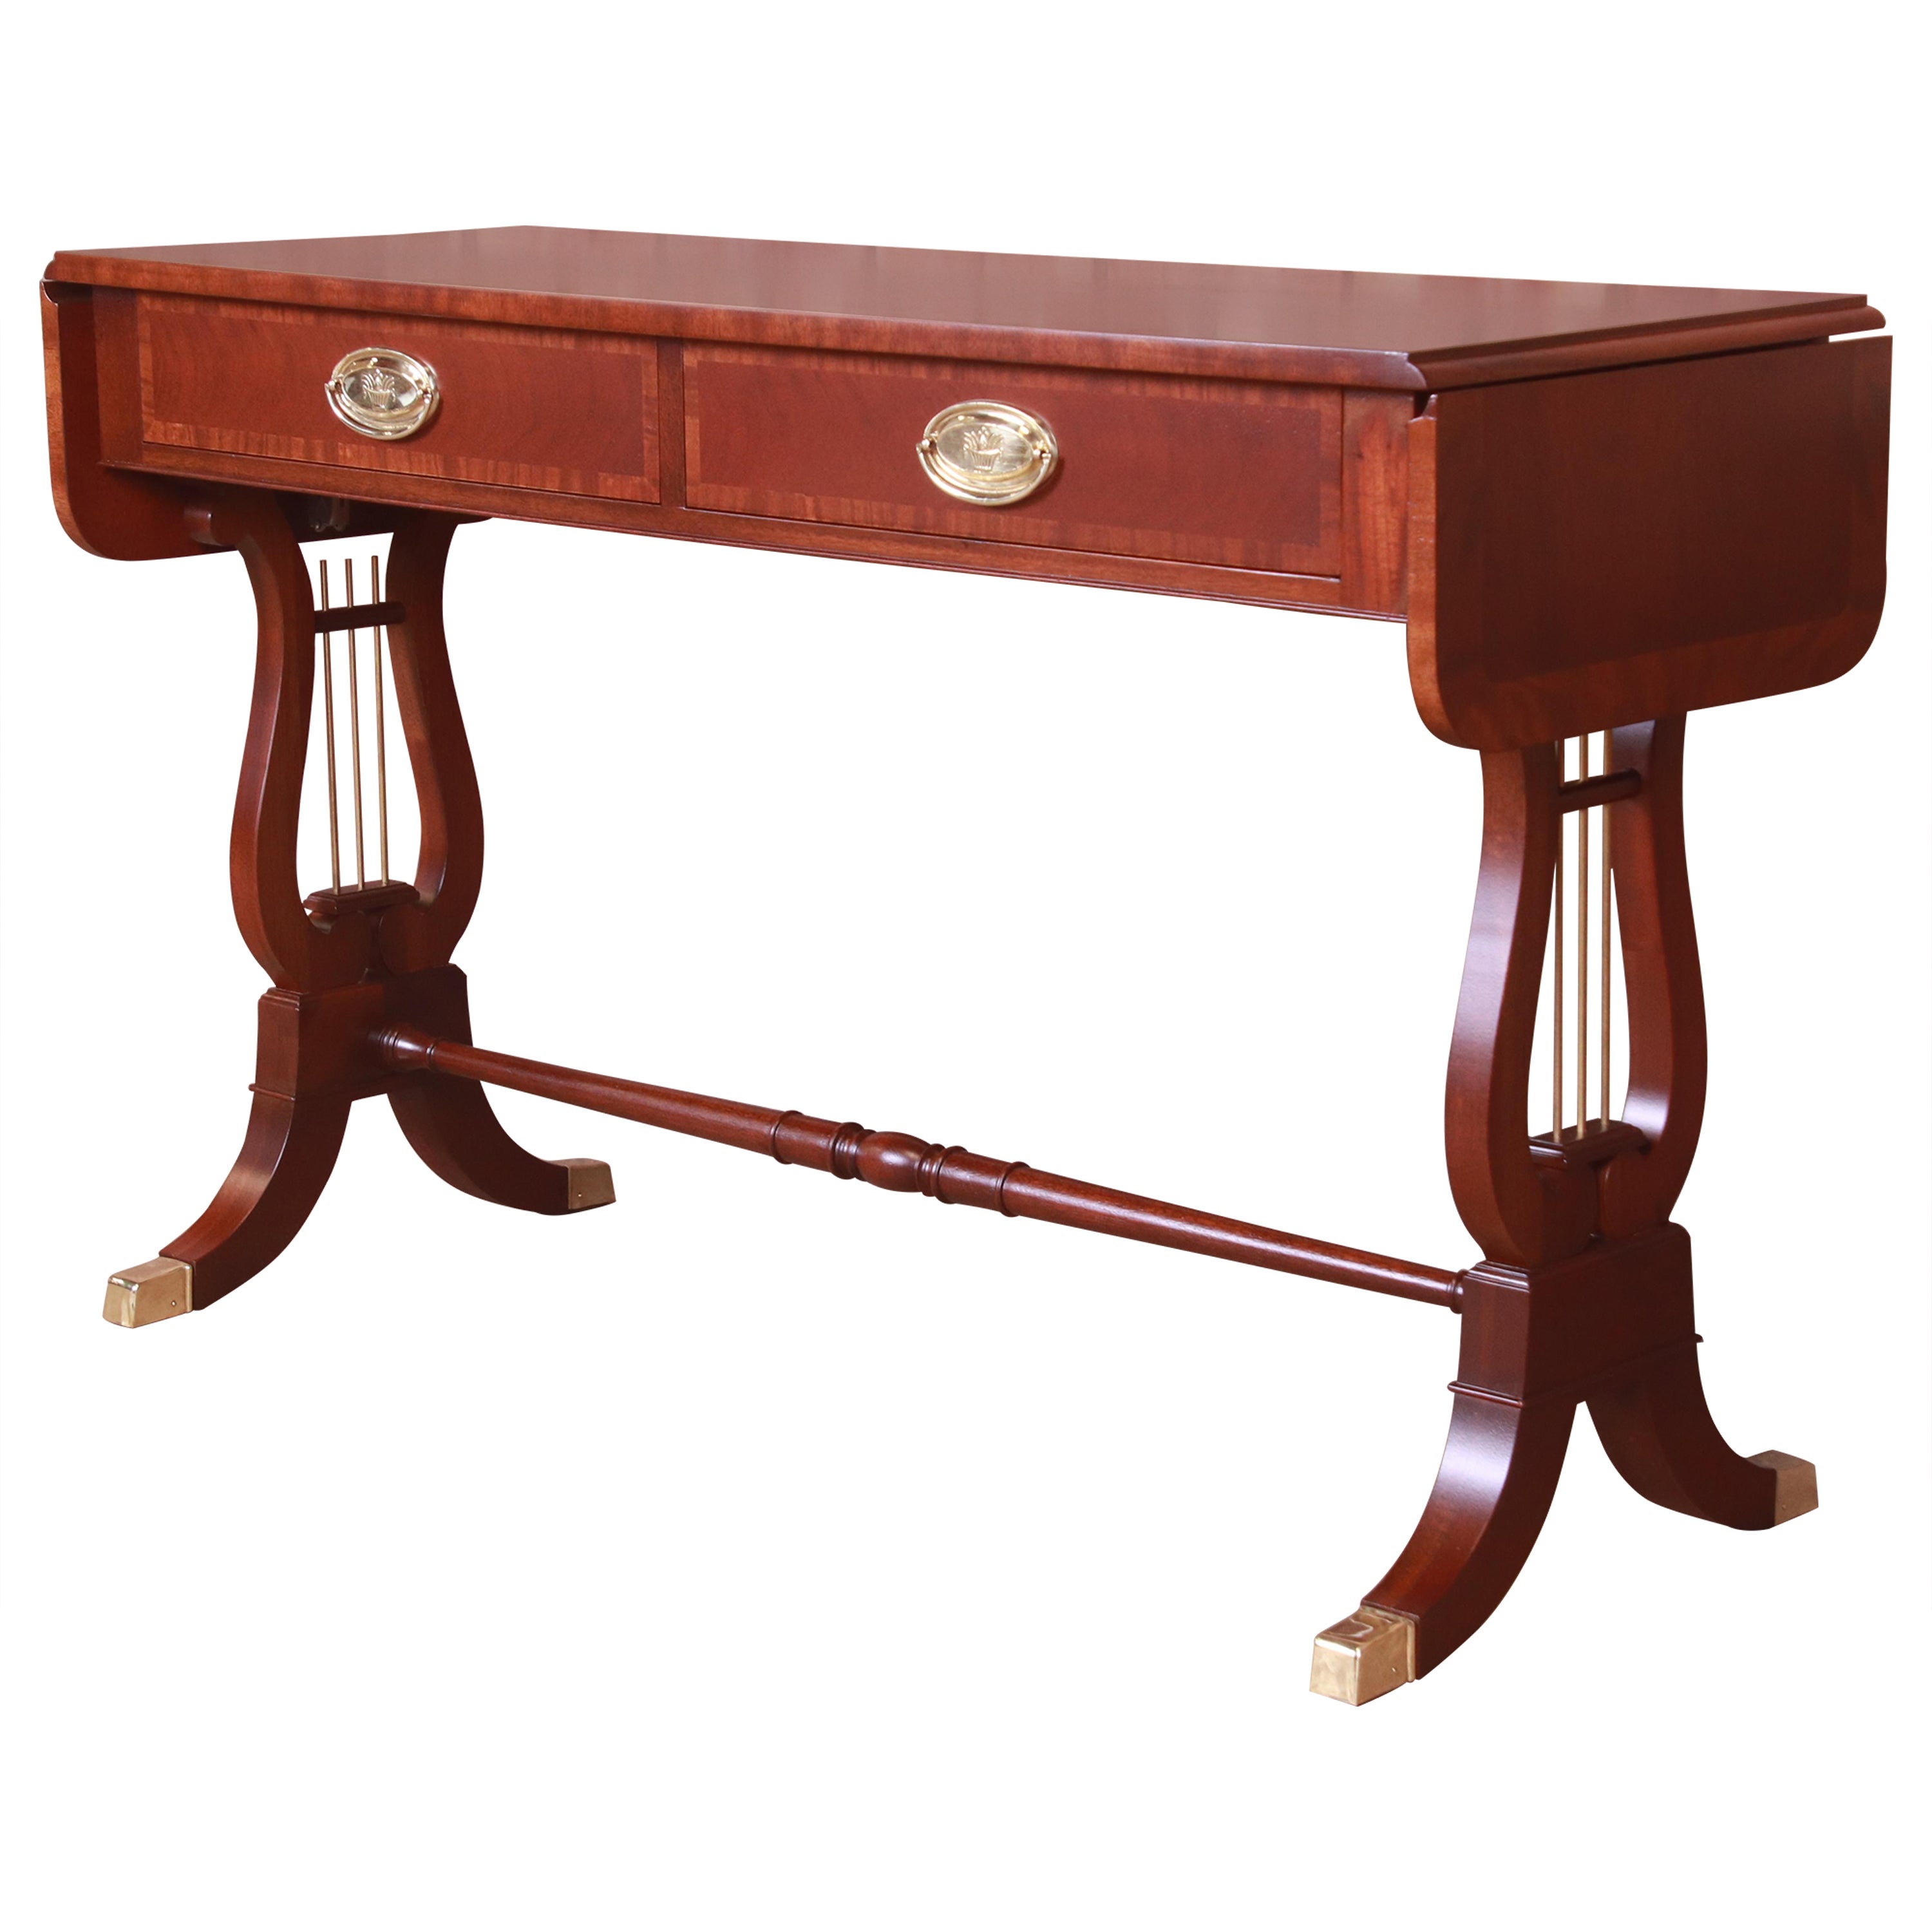 Baker Furniture English Regency Mahogany Lyre Base Console Table, Refinished